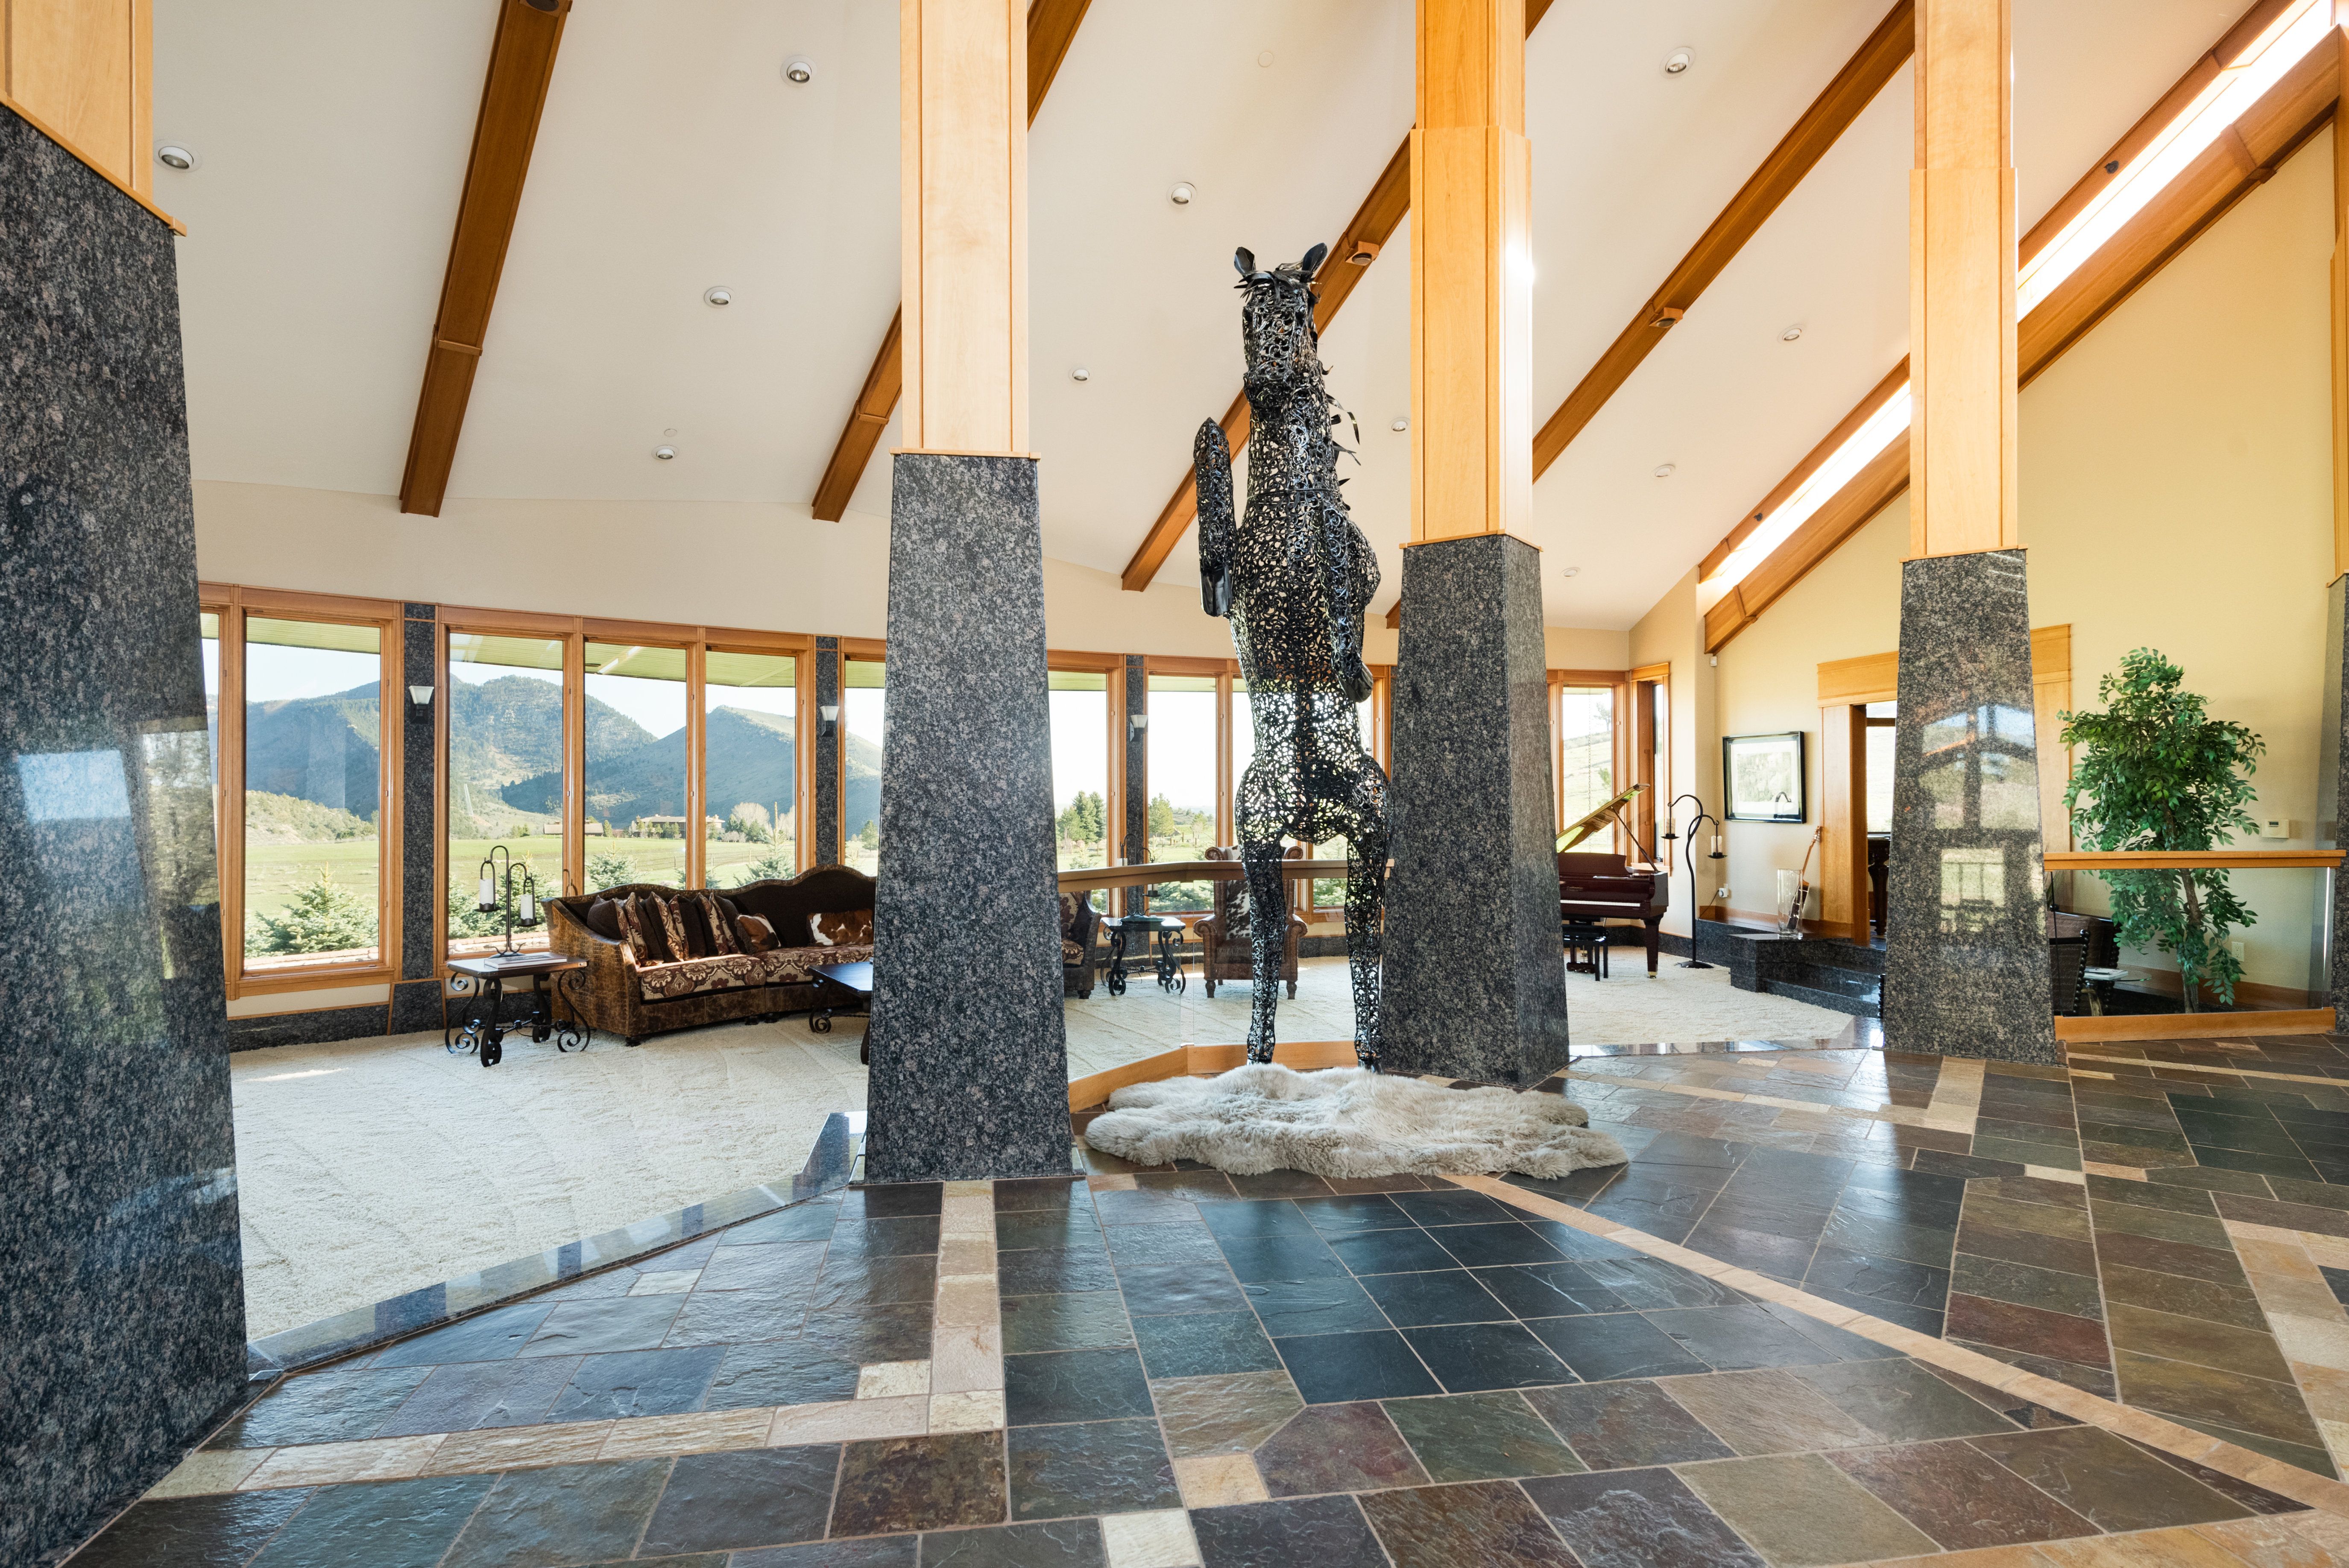 Colorado Mountain house on 35 acres asks $7M horse statue 